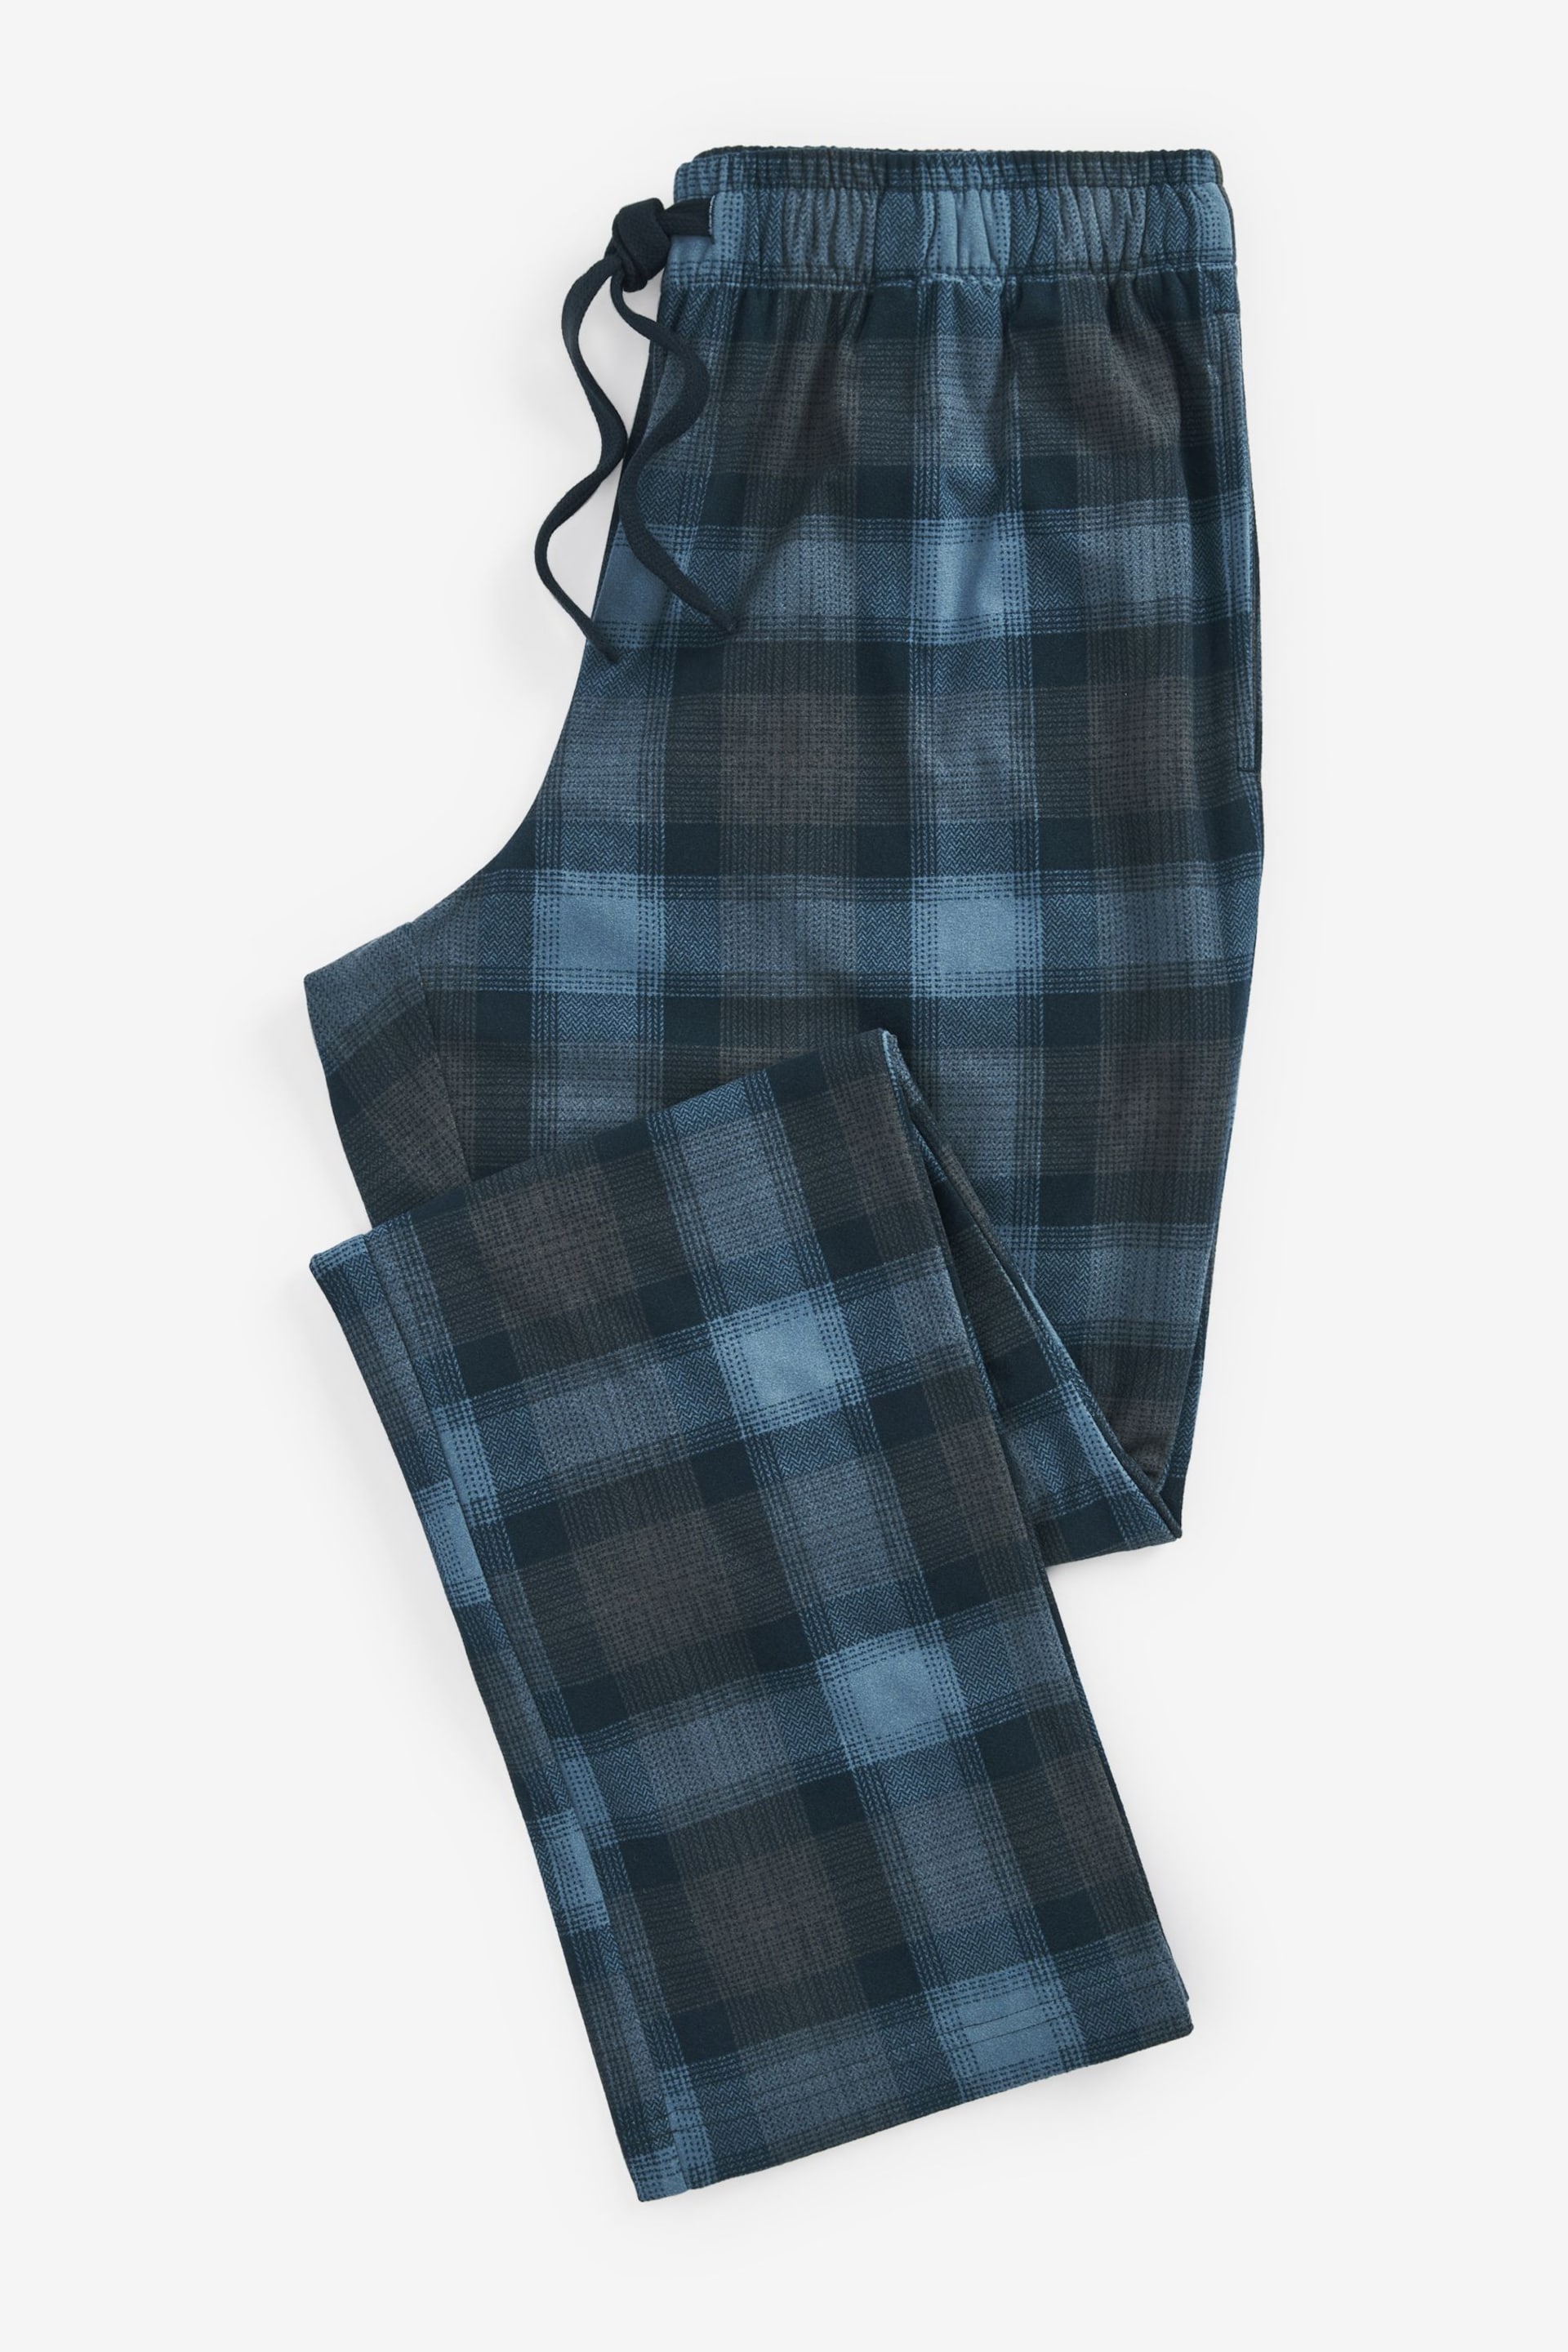 Grey/Blue Check Motionflex Cosy Pyjamas Set - Image 8 of 8